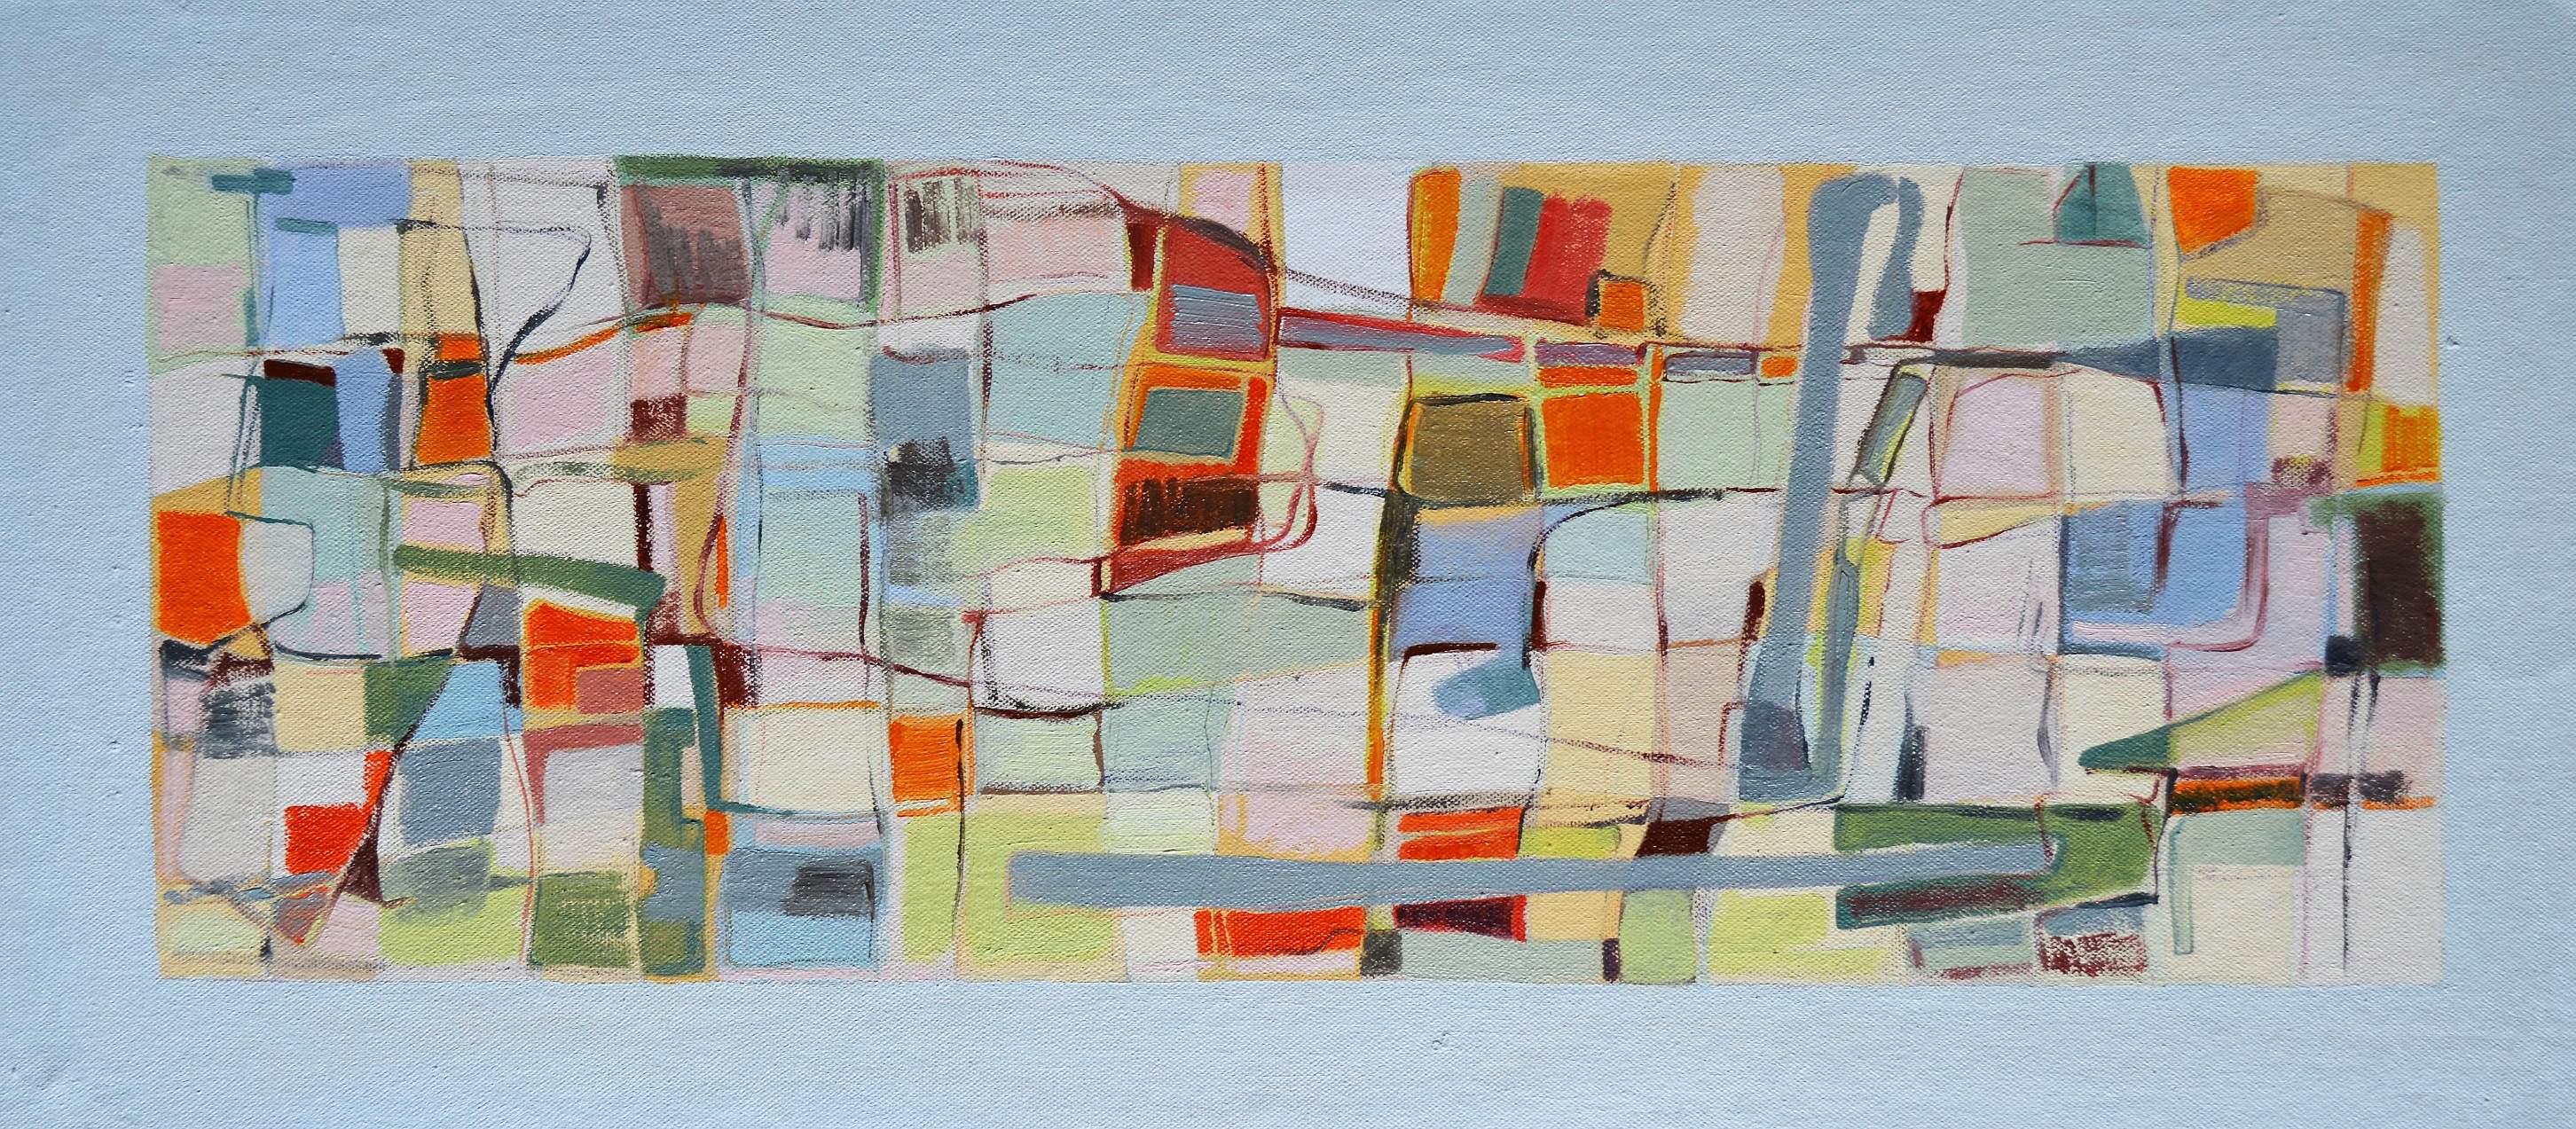 'Patterning # 9' 2020. Oil, crayon on canvas. Framed size 60cm x 26cm.